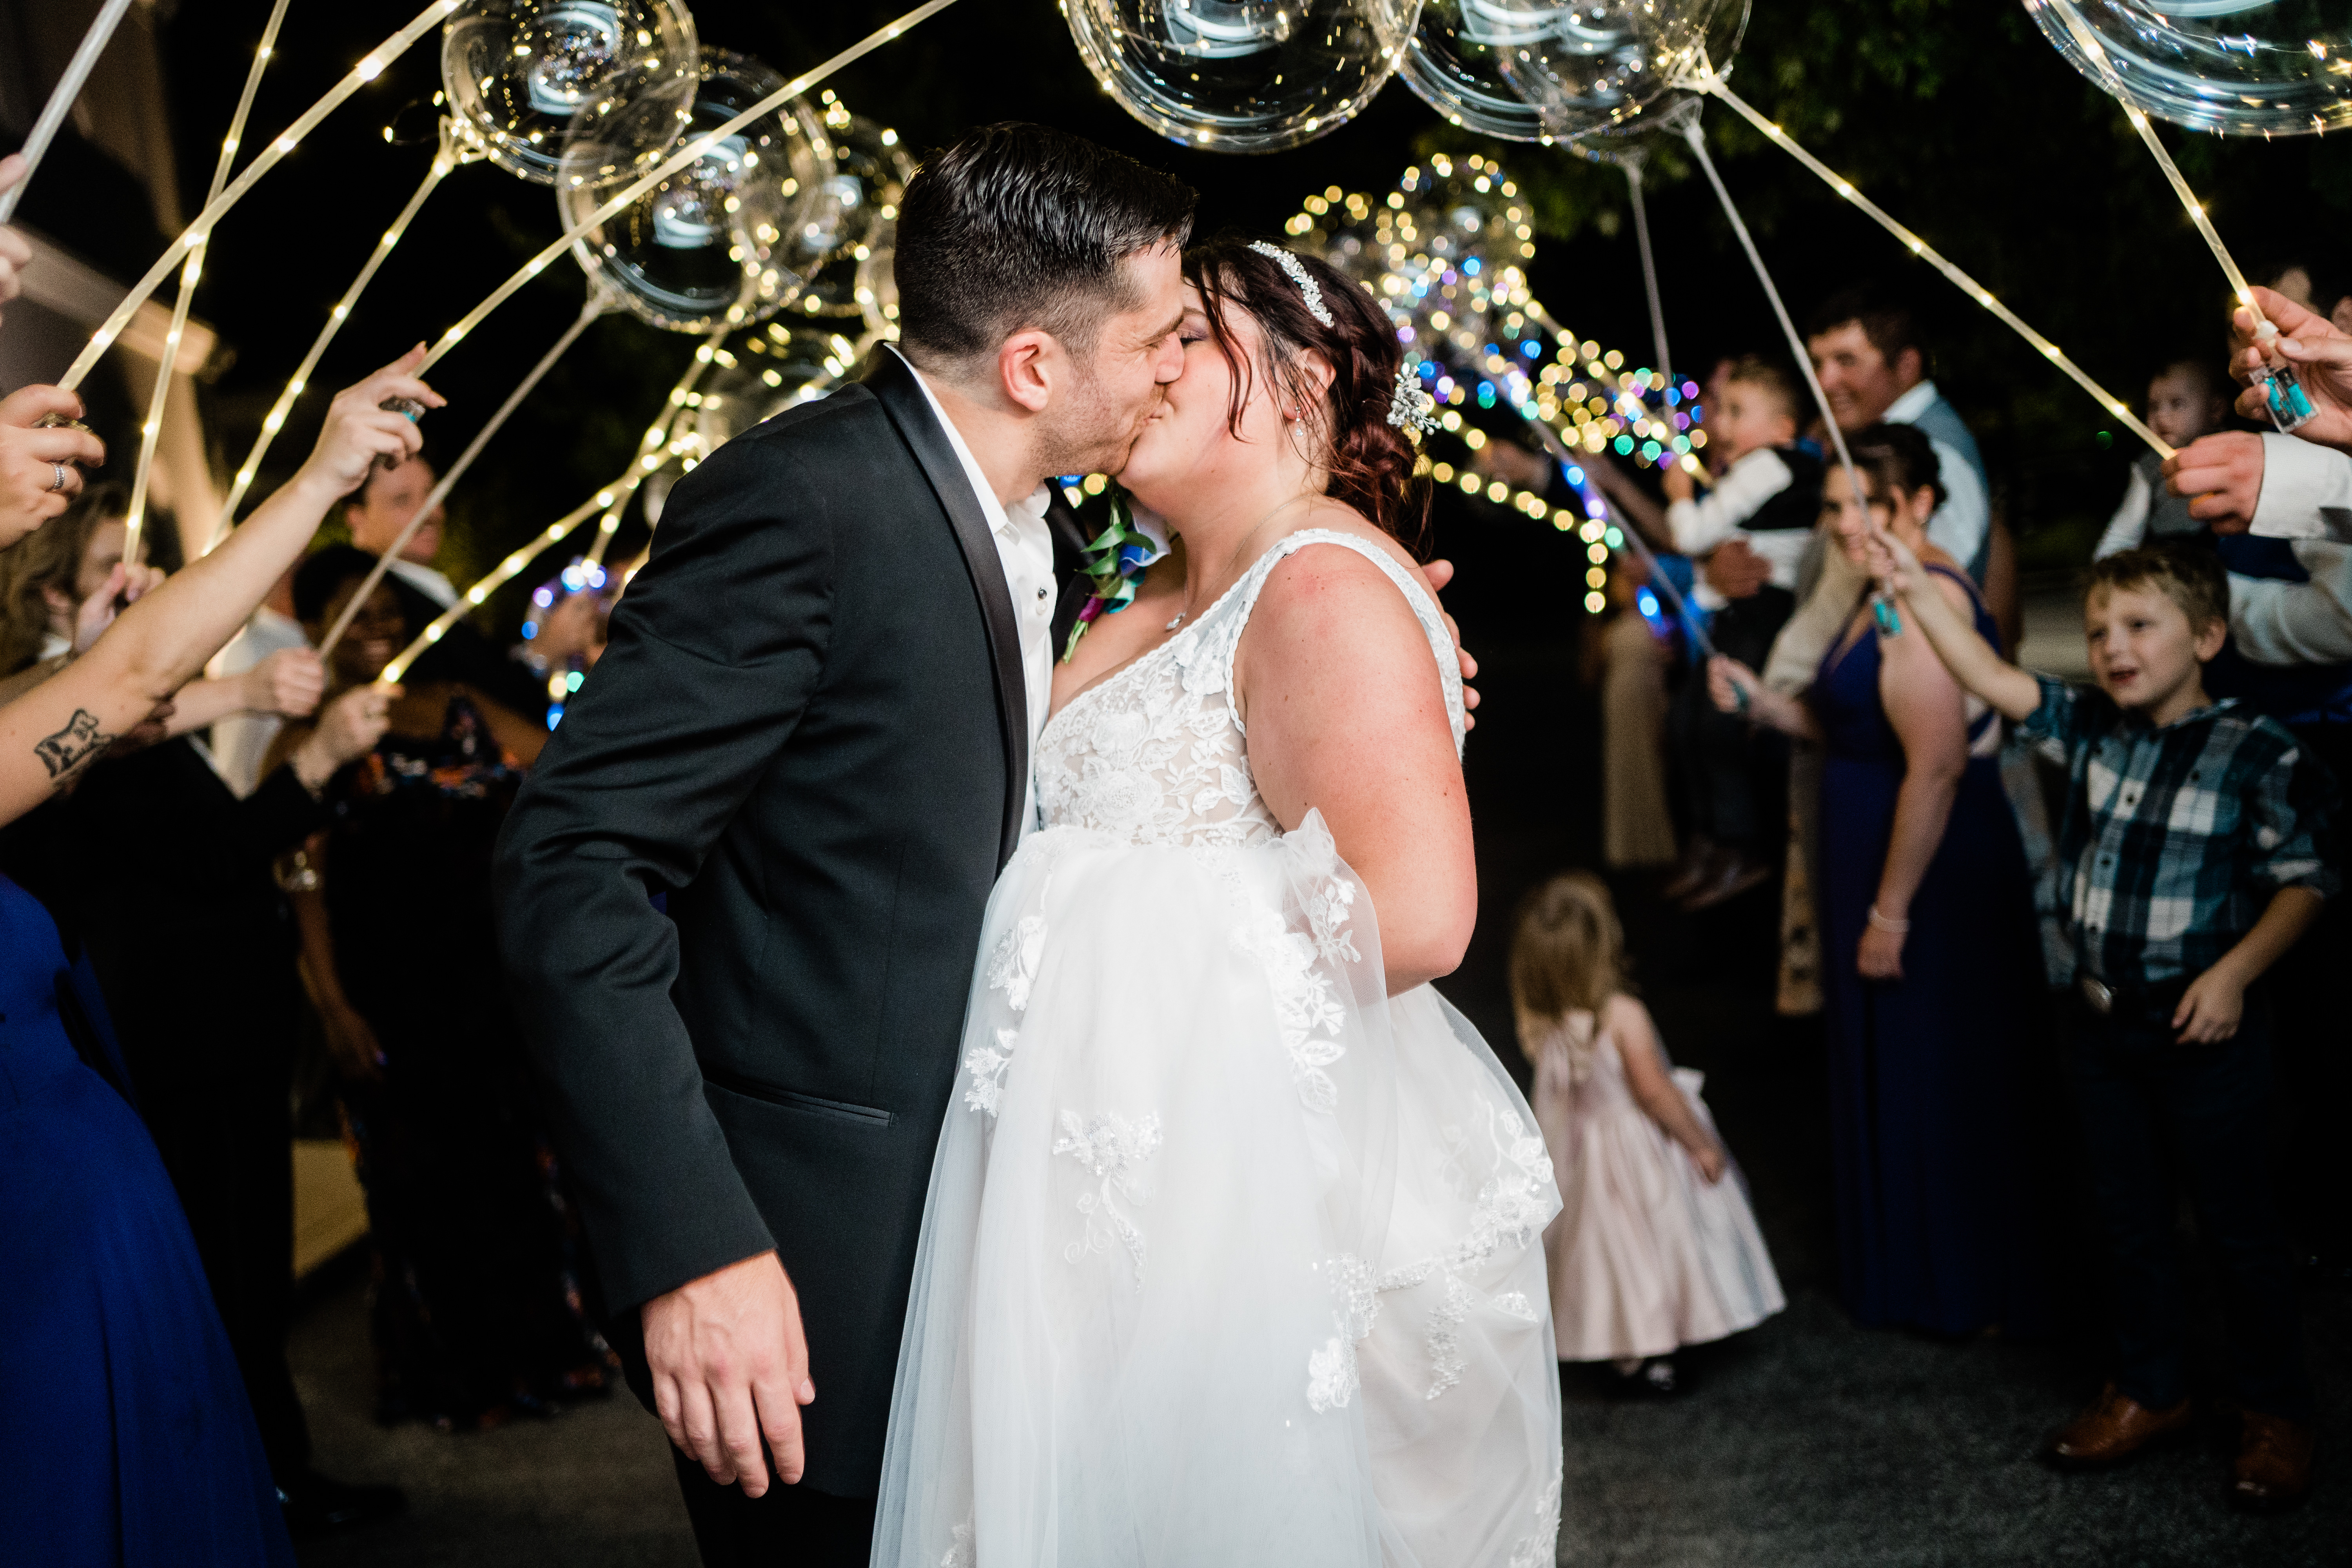 Fort Wayne wedding photographer captures  bride and groom kissing during wedding send off